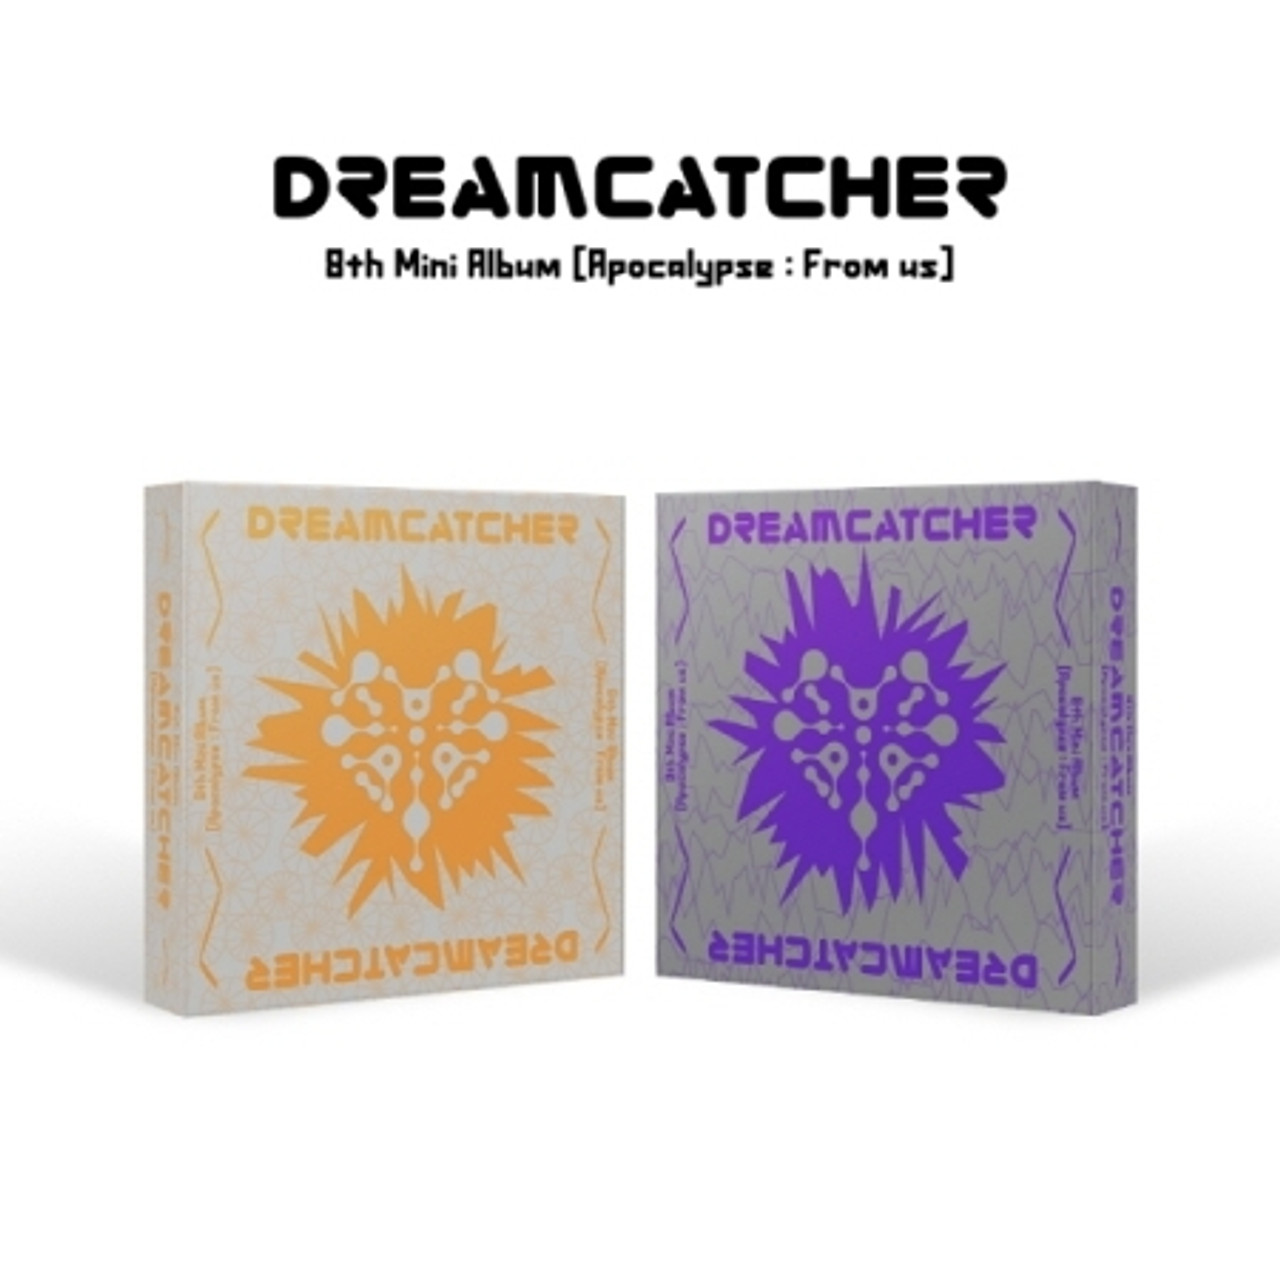 Dreamcatcher  8th Mini Album  Apocalypse  From us  A ver 